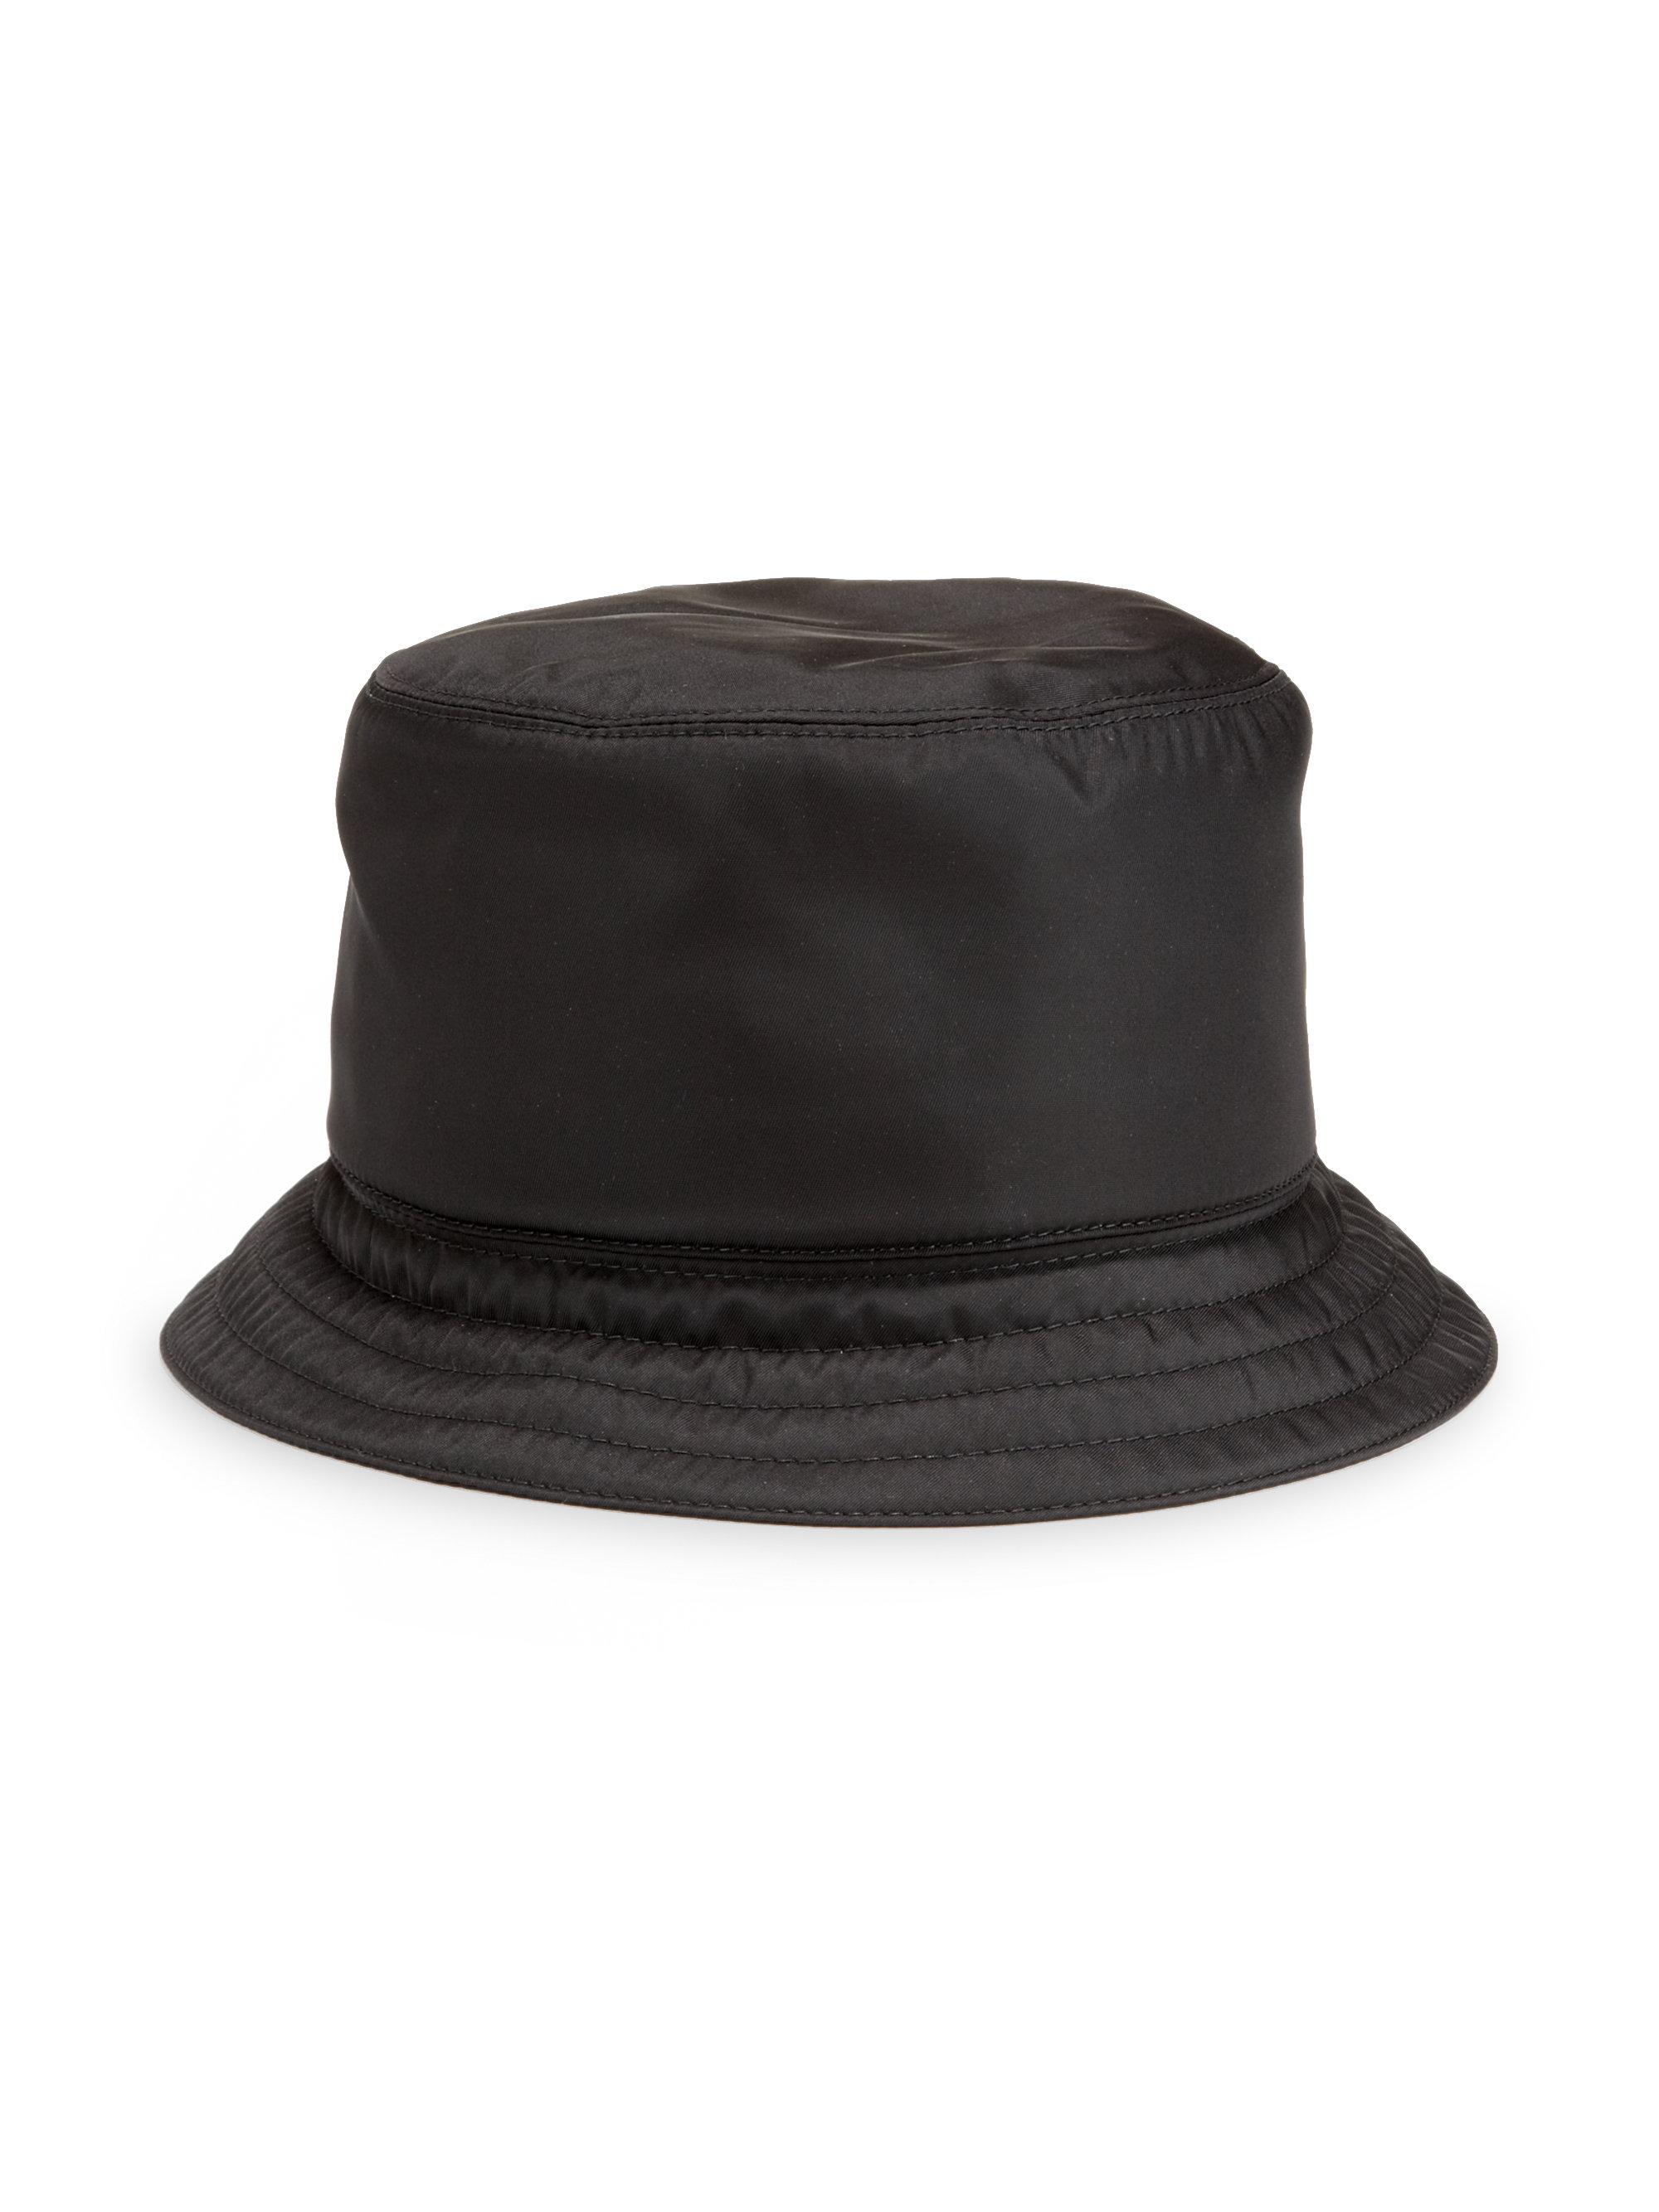 Prada Synthetic Nylon Bucket Hat in Black for Men - Lyst